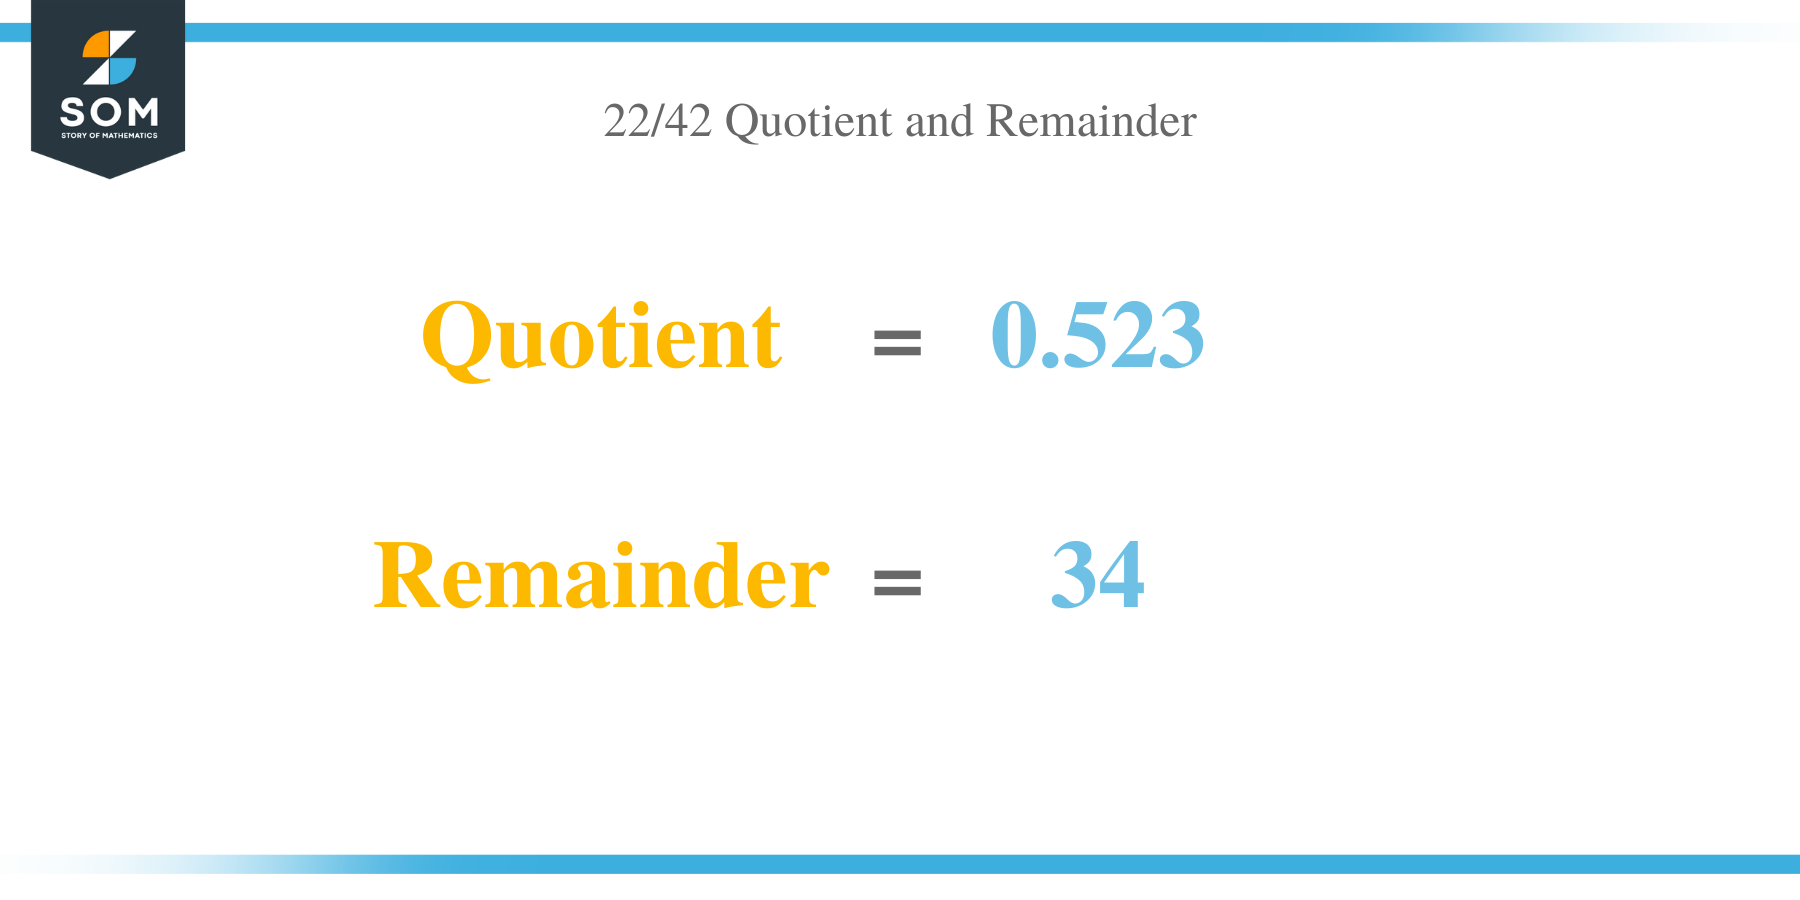 Quotient and Remainder of 22 per 42